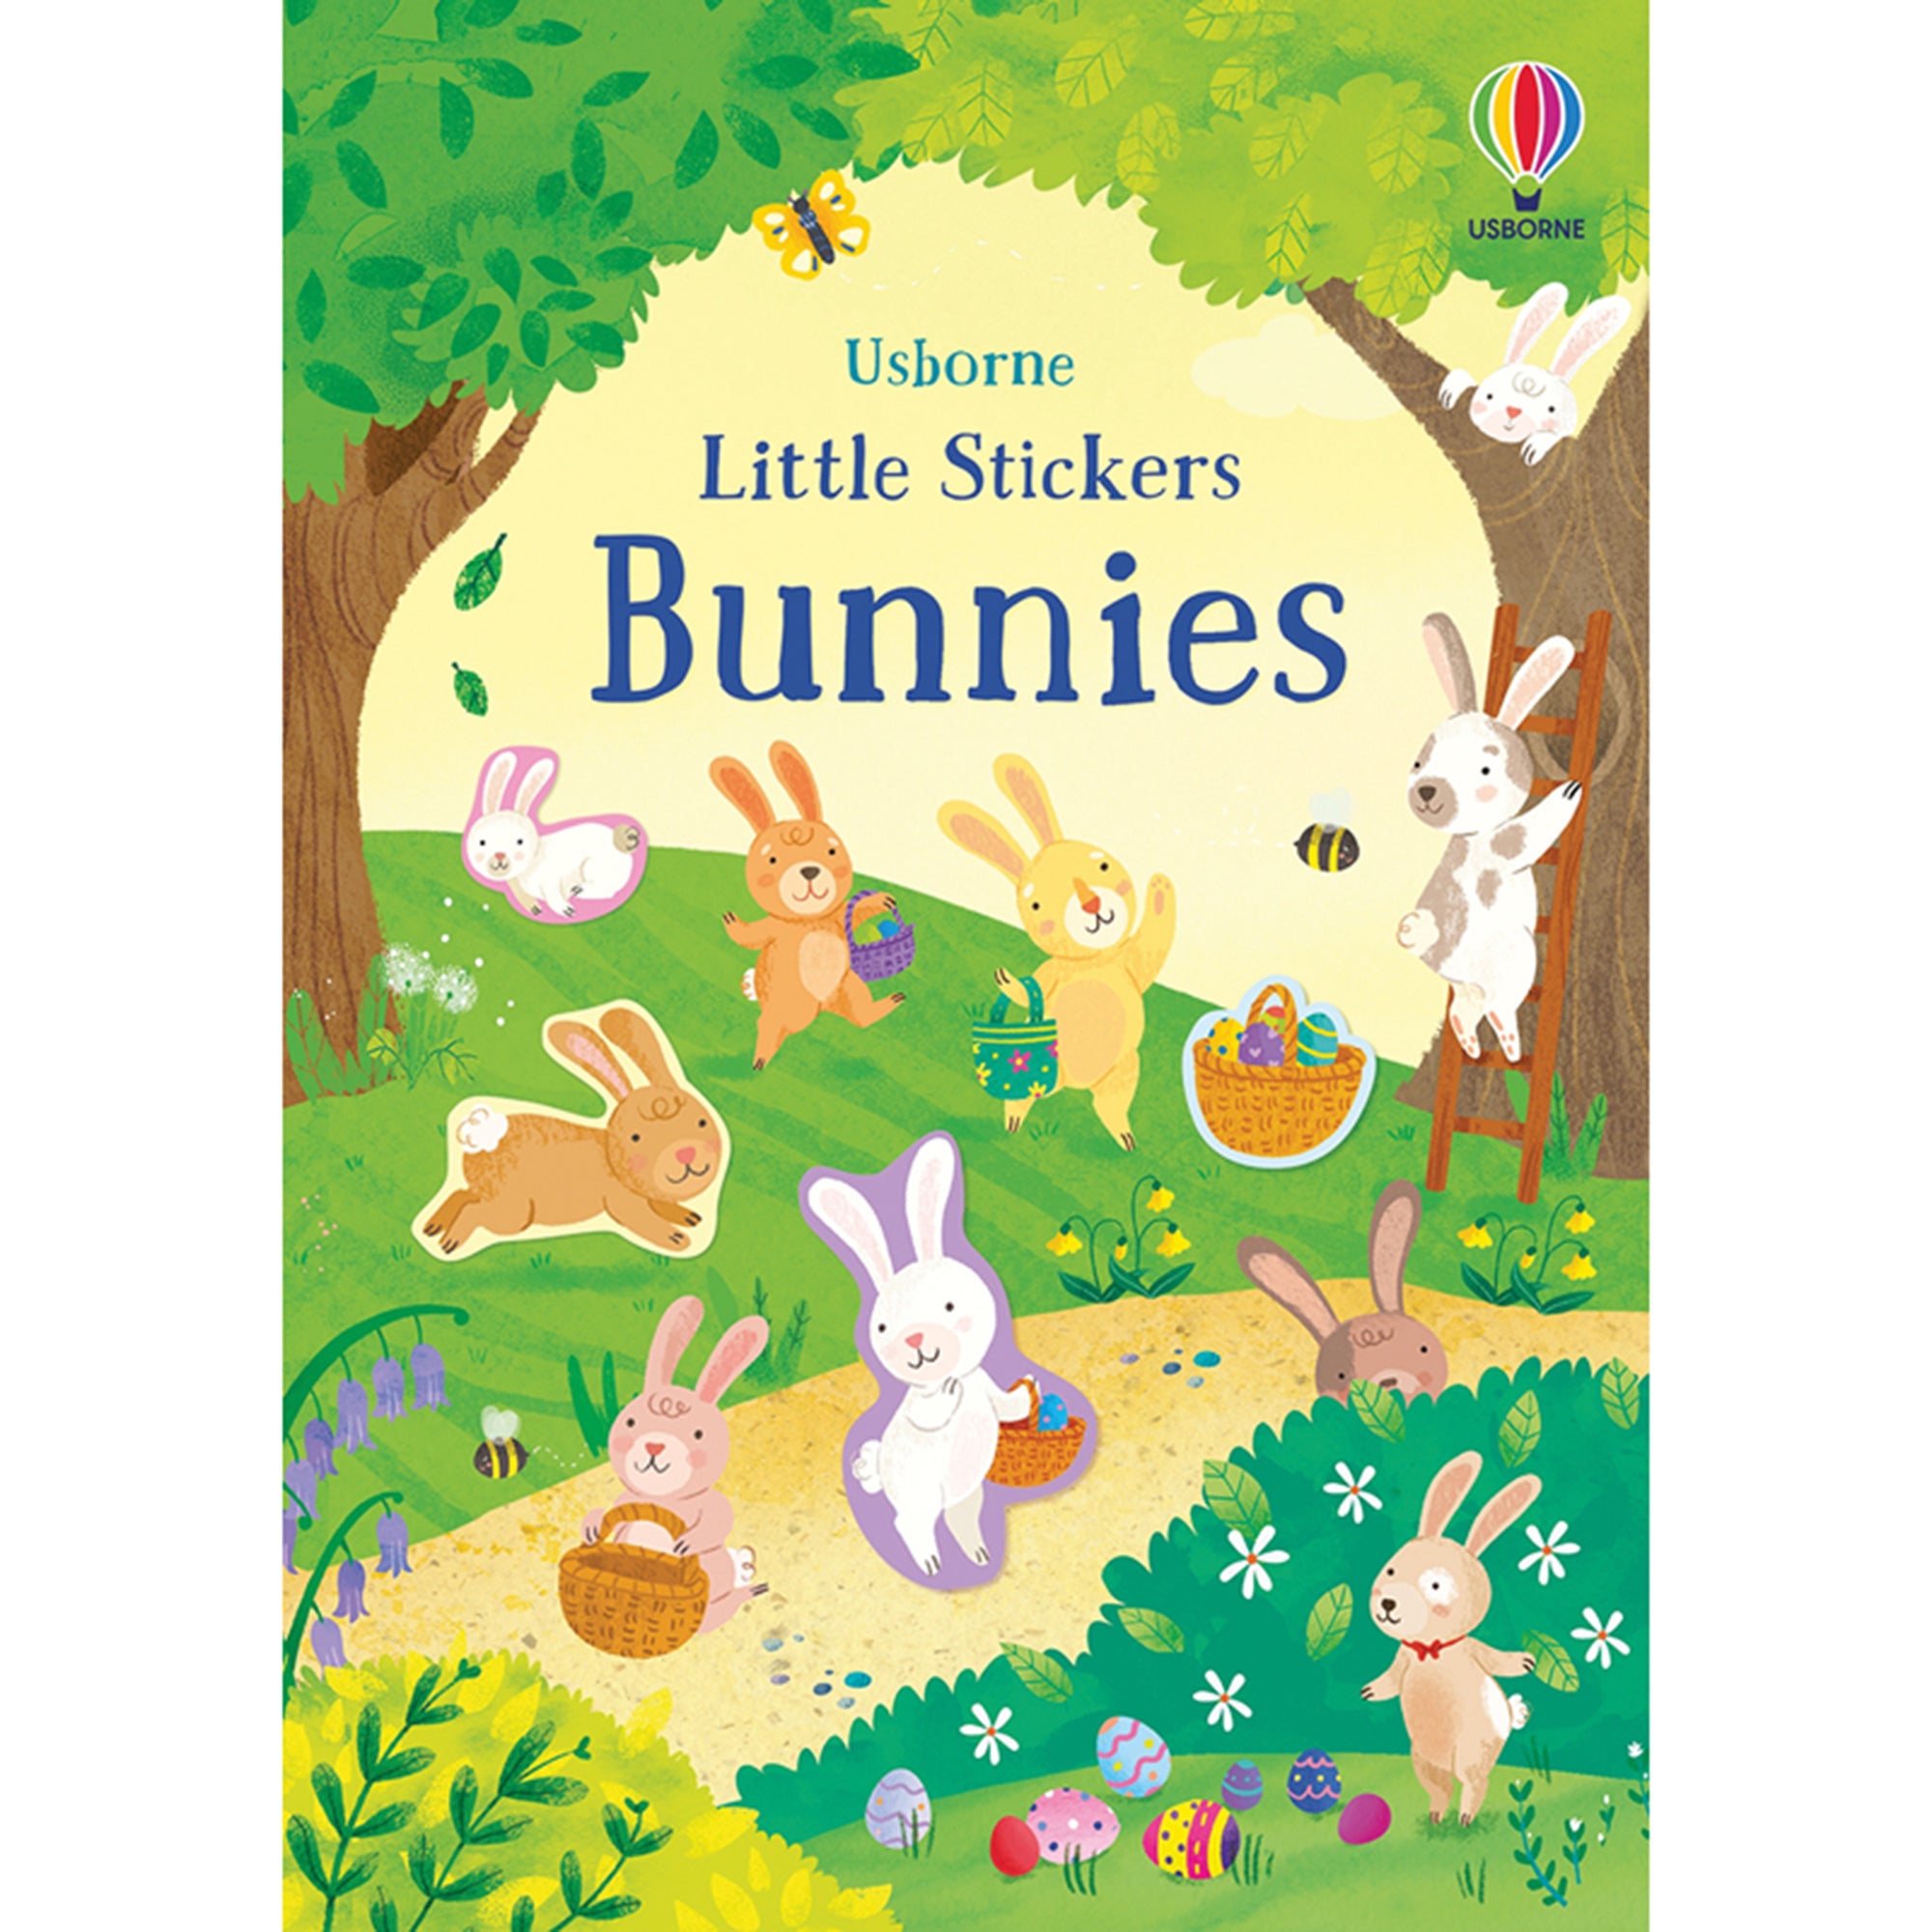 Little Stickers Bunnies Activity Book